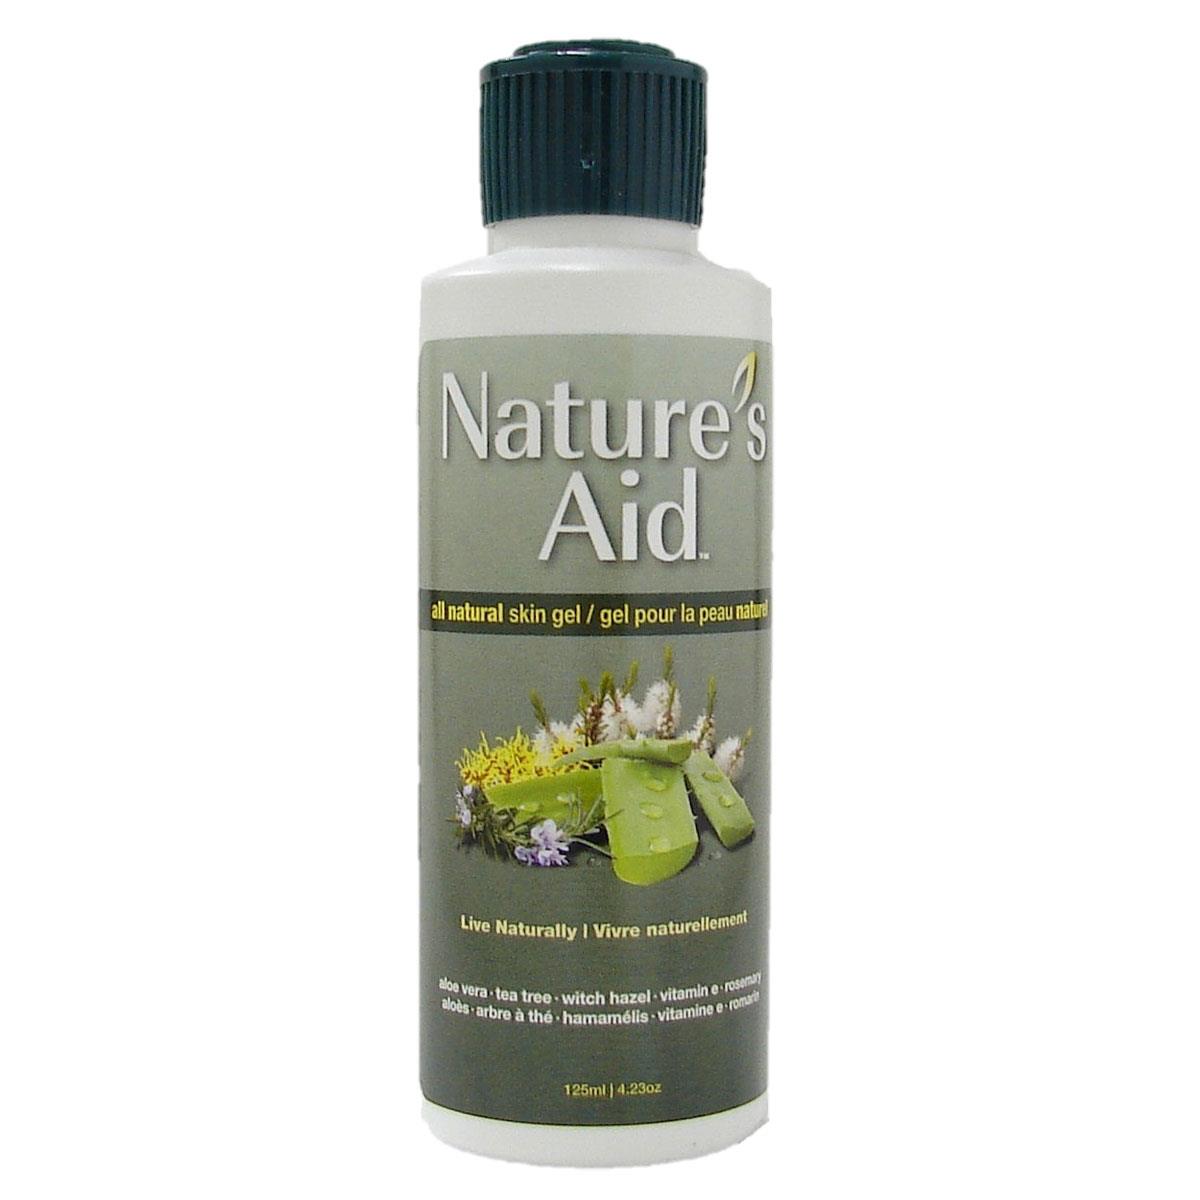 Nature's Aid Skin Gel - Homegrown Foods, Stony Plain